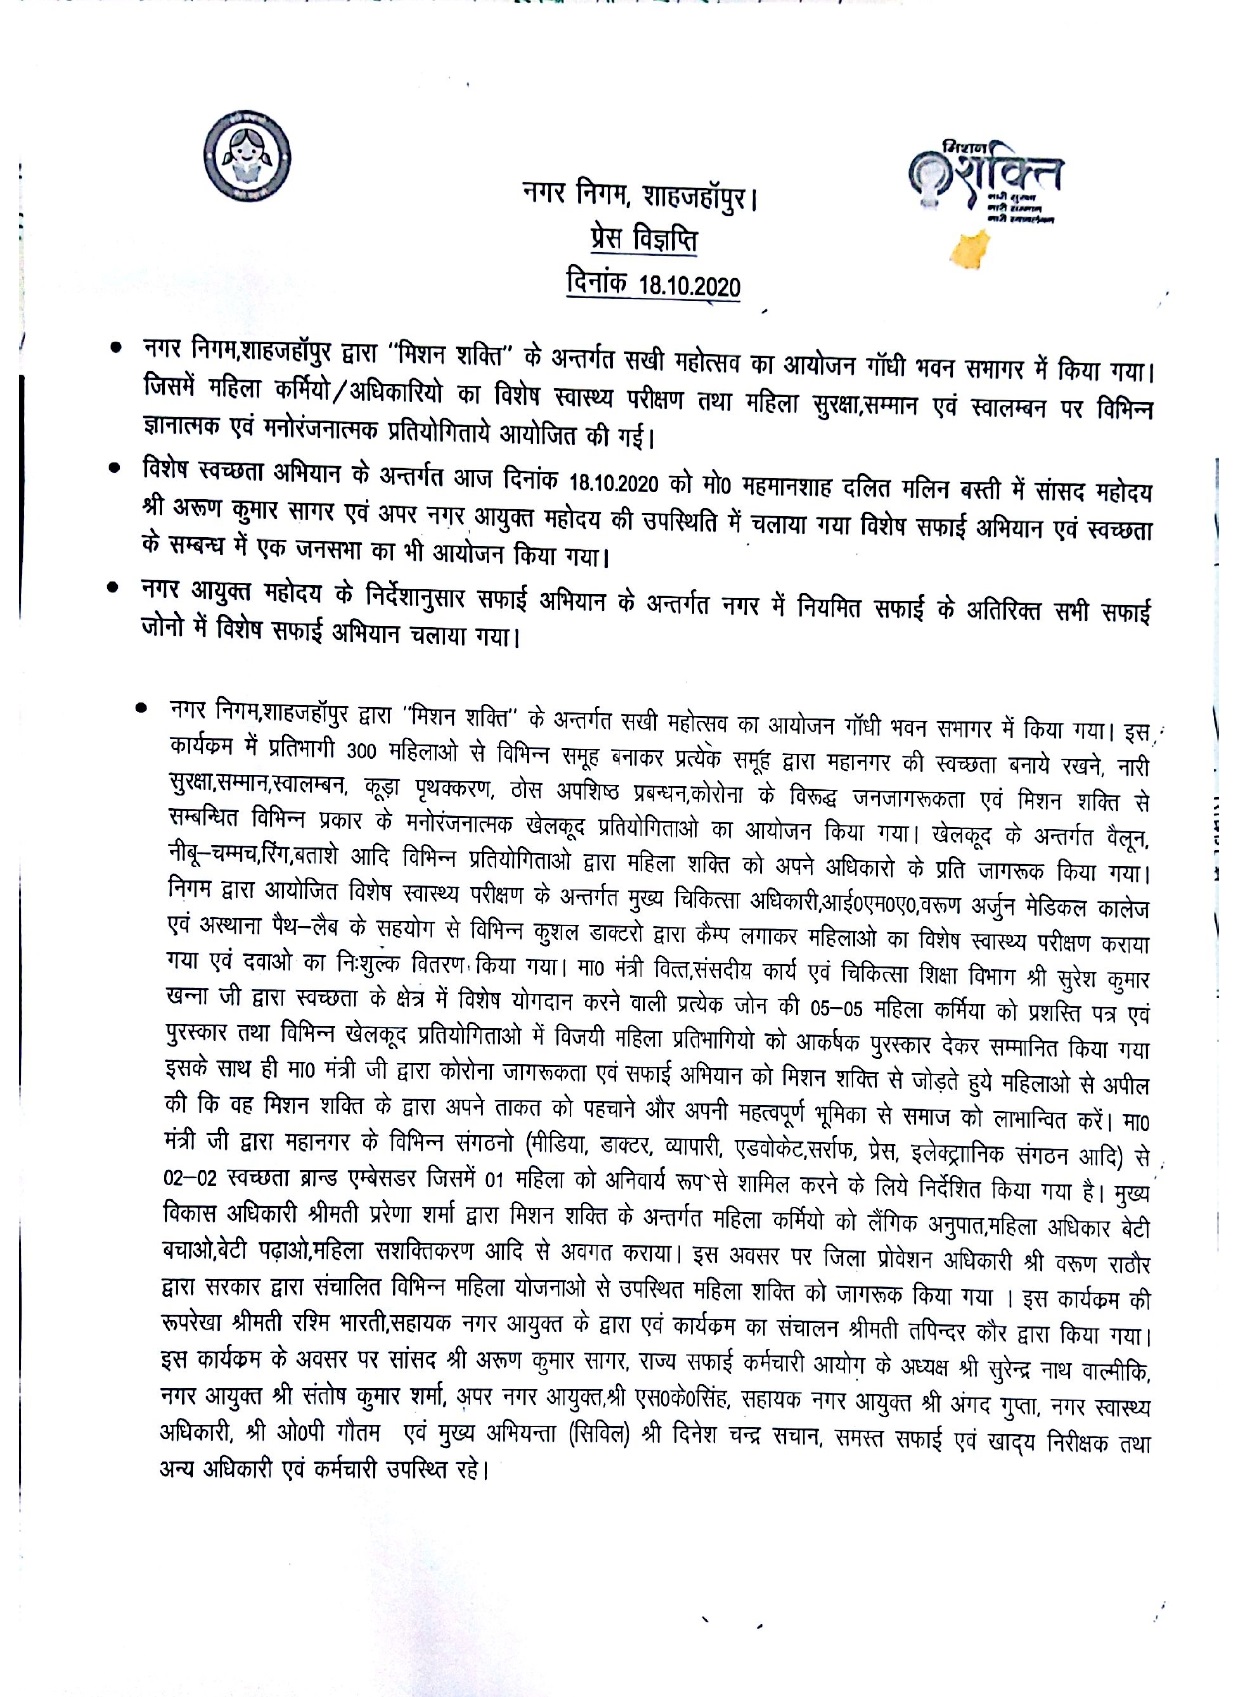 Regarding organizing of Sakhi Mahotsav by Nagar Nigam Shahjahanpur in Gandhi Auditorium, under “Mission Shakti”